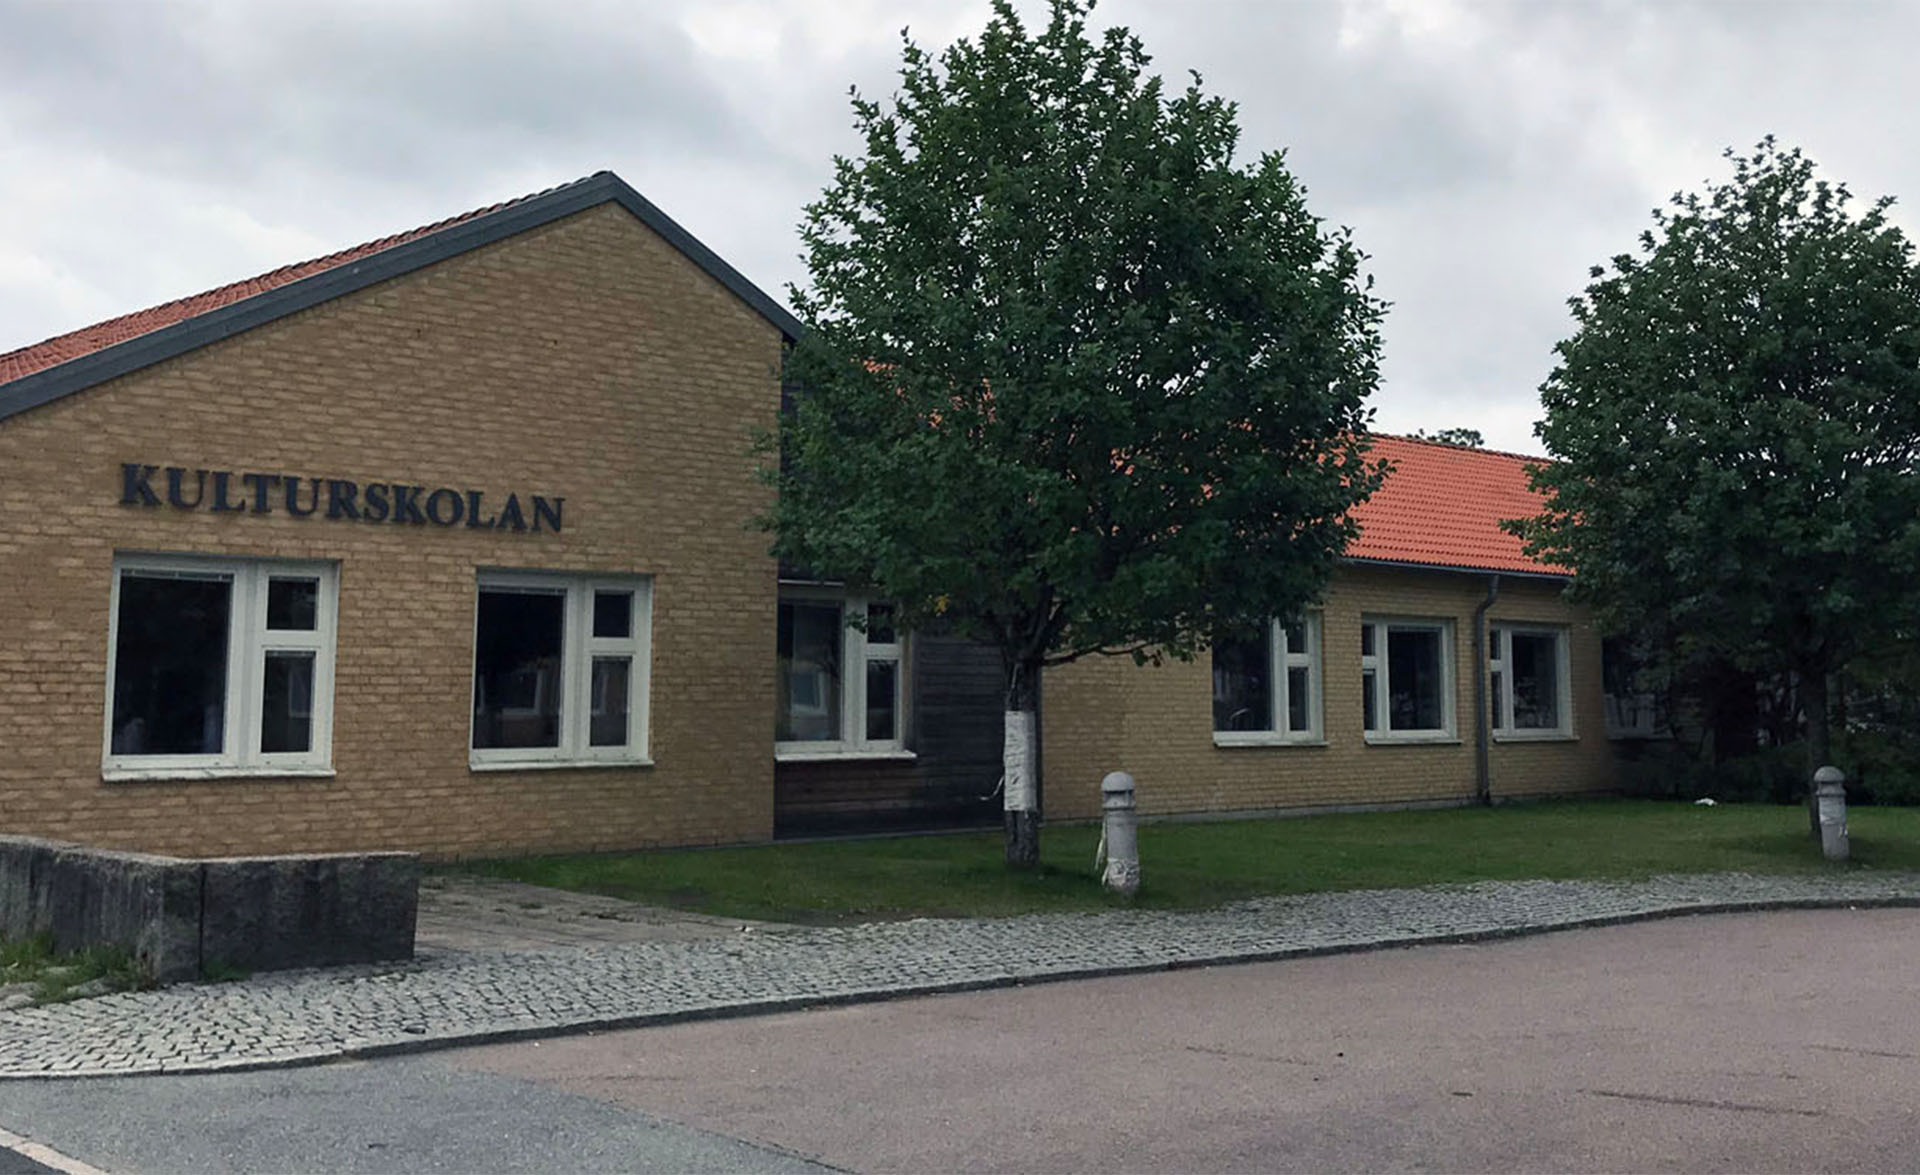 Kulturskolans hus i Mölnlycke